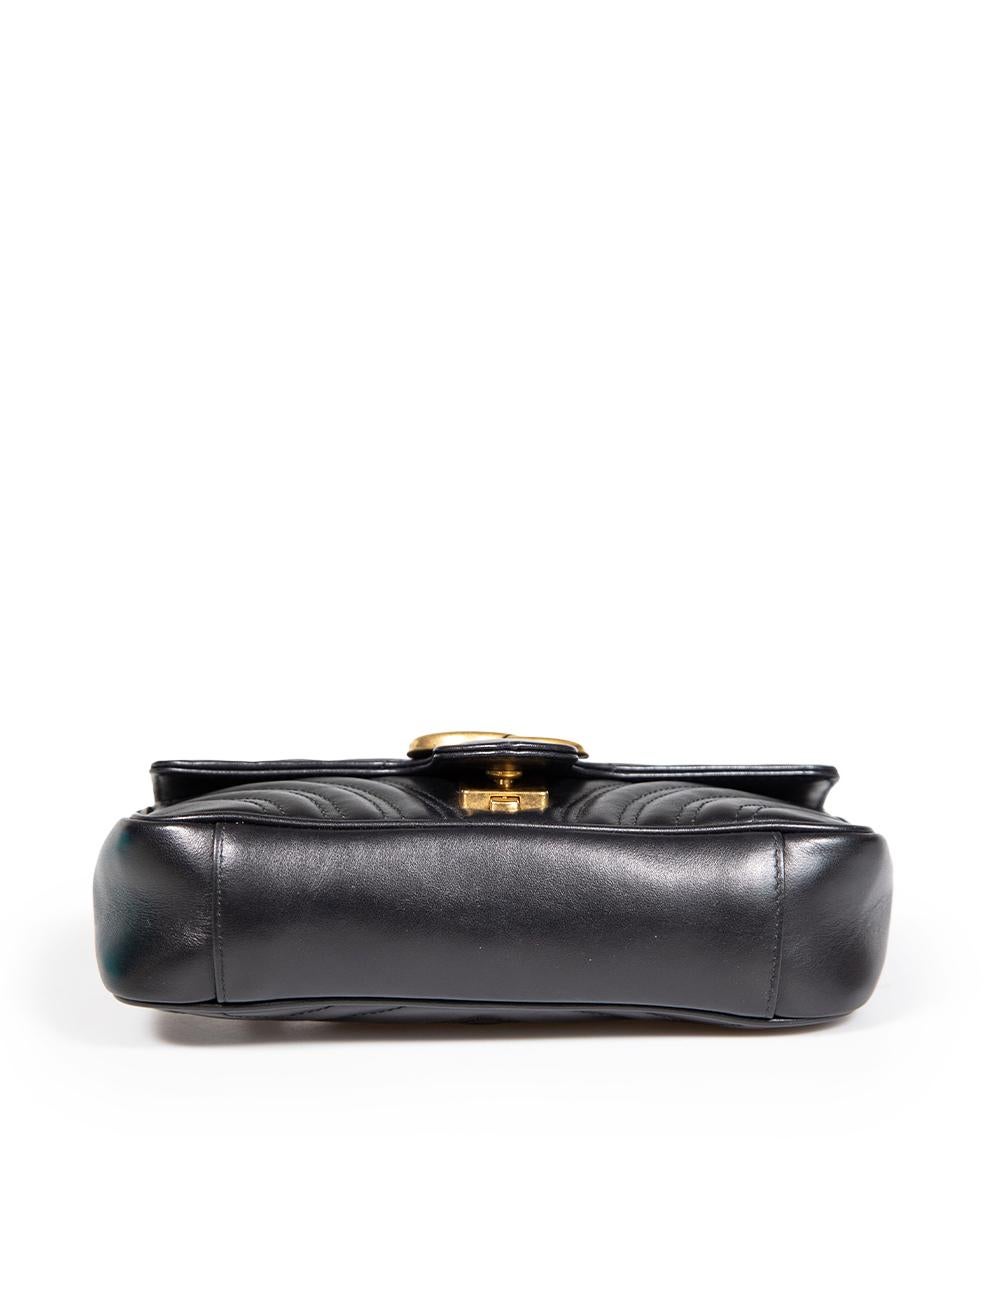 Women's Gucci Black Leather Mini GG Marmont Crossbody Bag For Sale